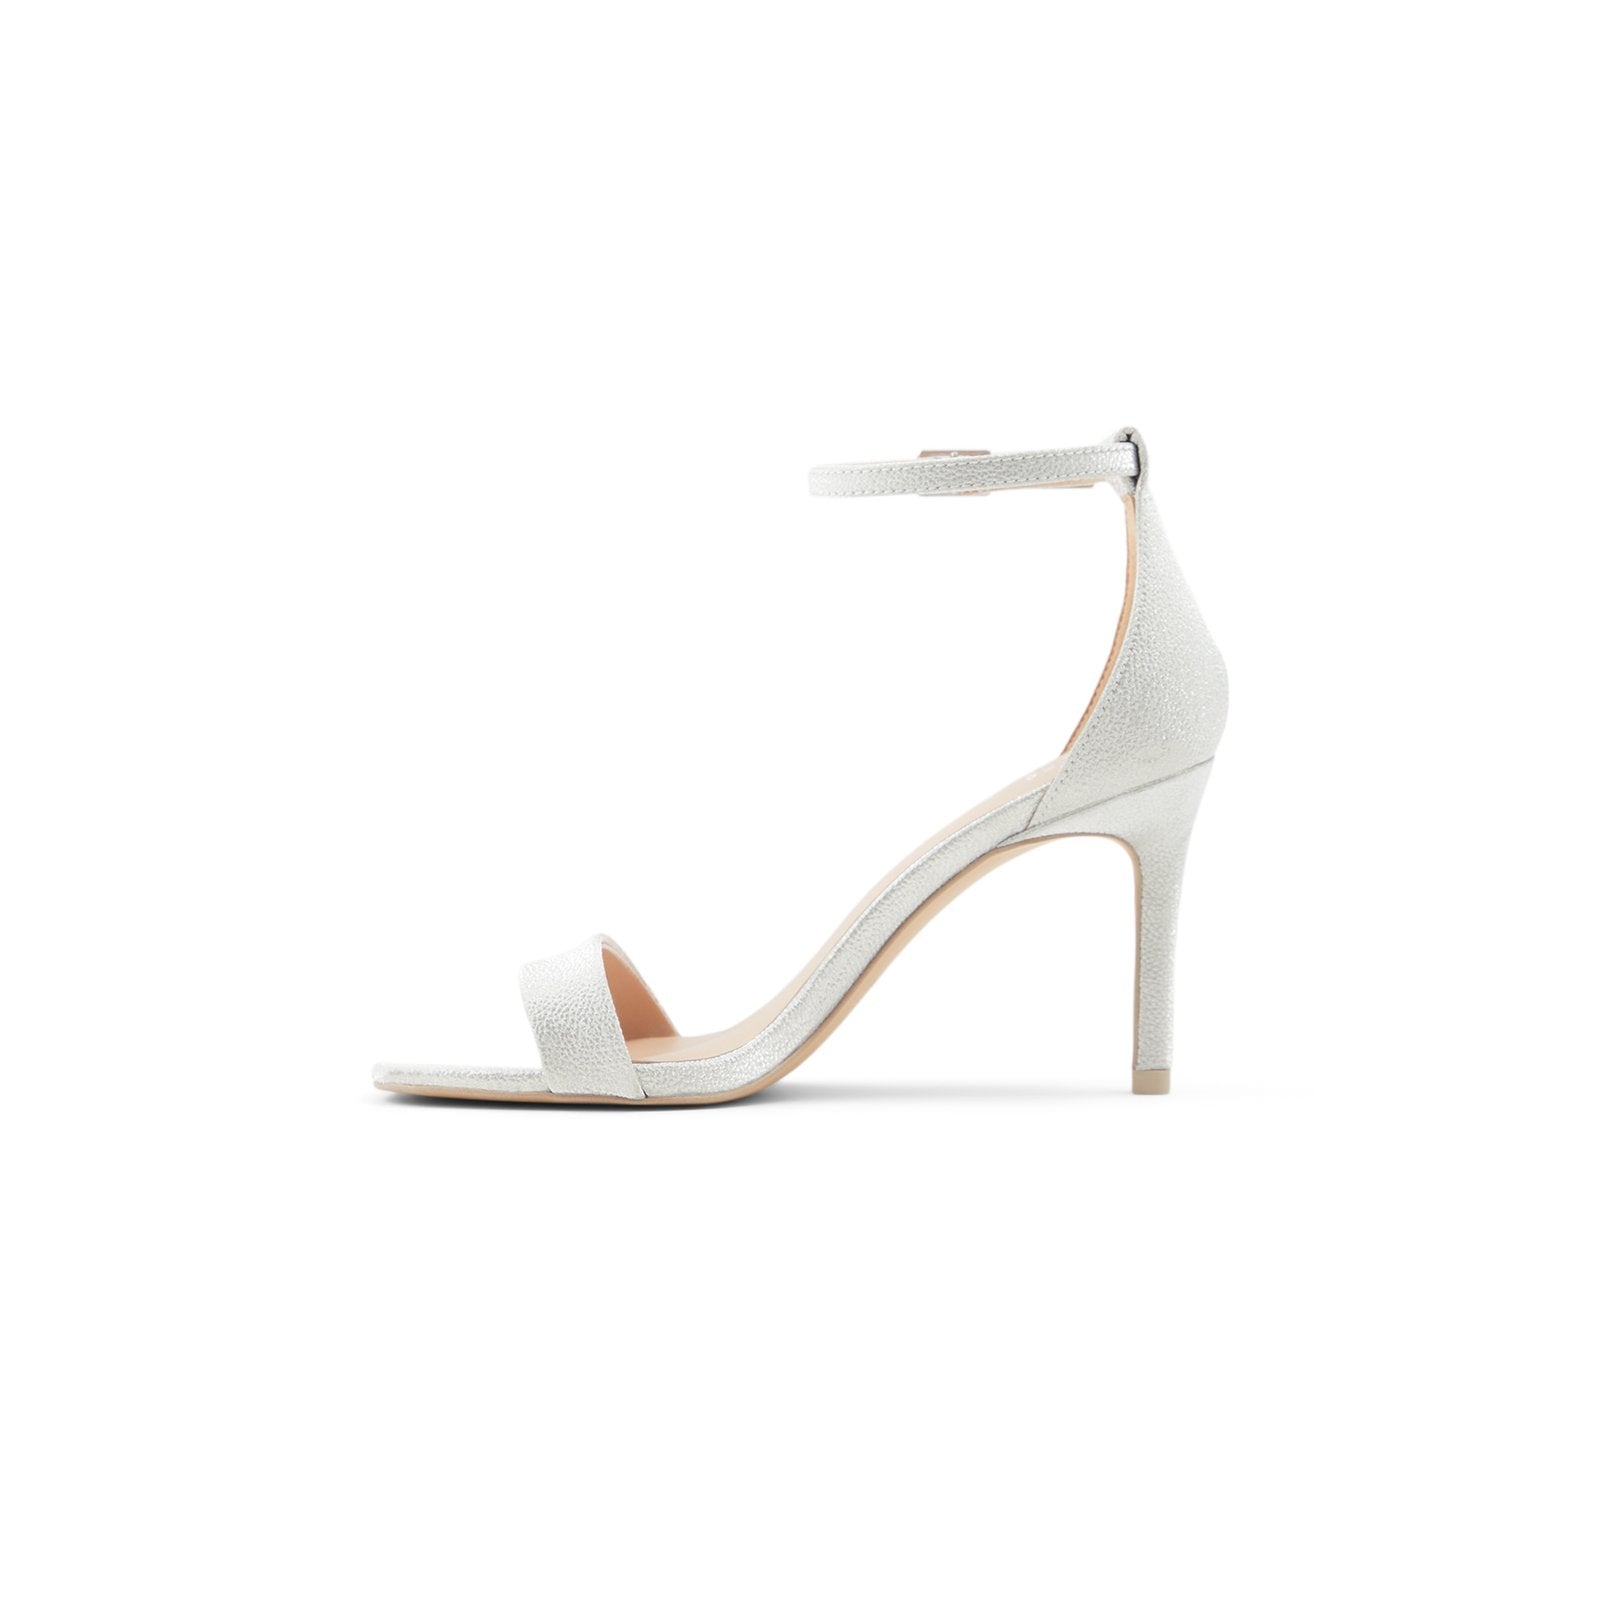 Ella / Heeled Sandals Women Shoes - SILVER - CALL IT SPRING KSA